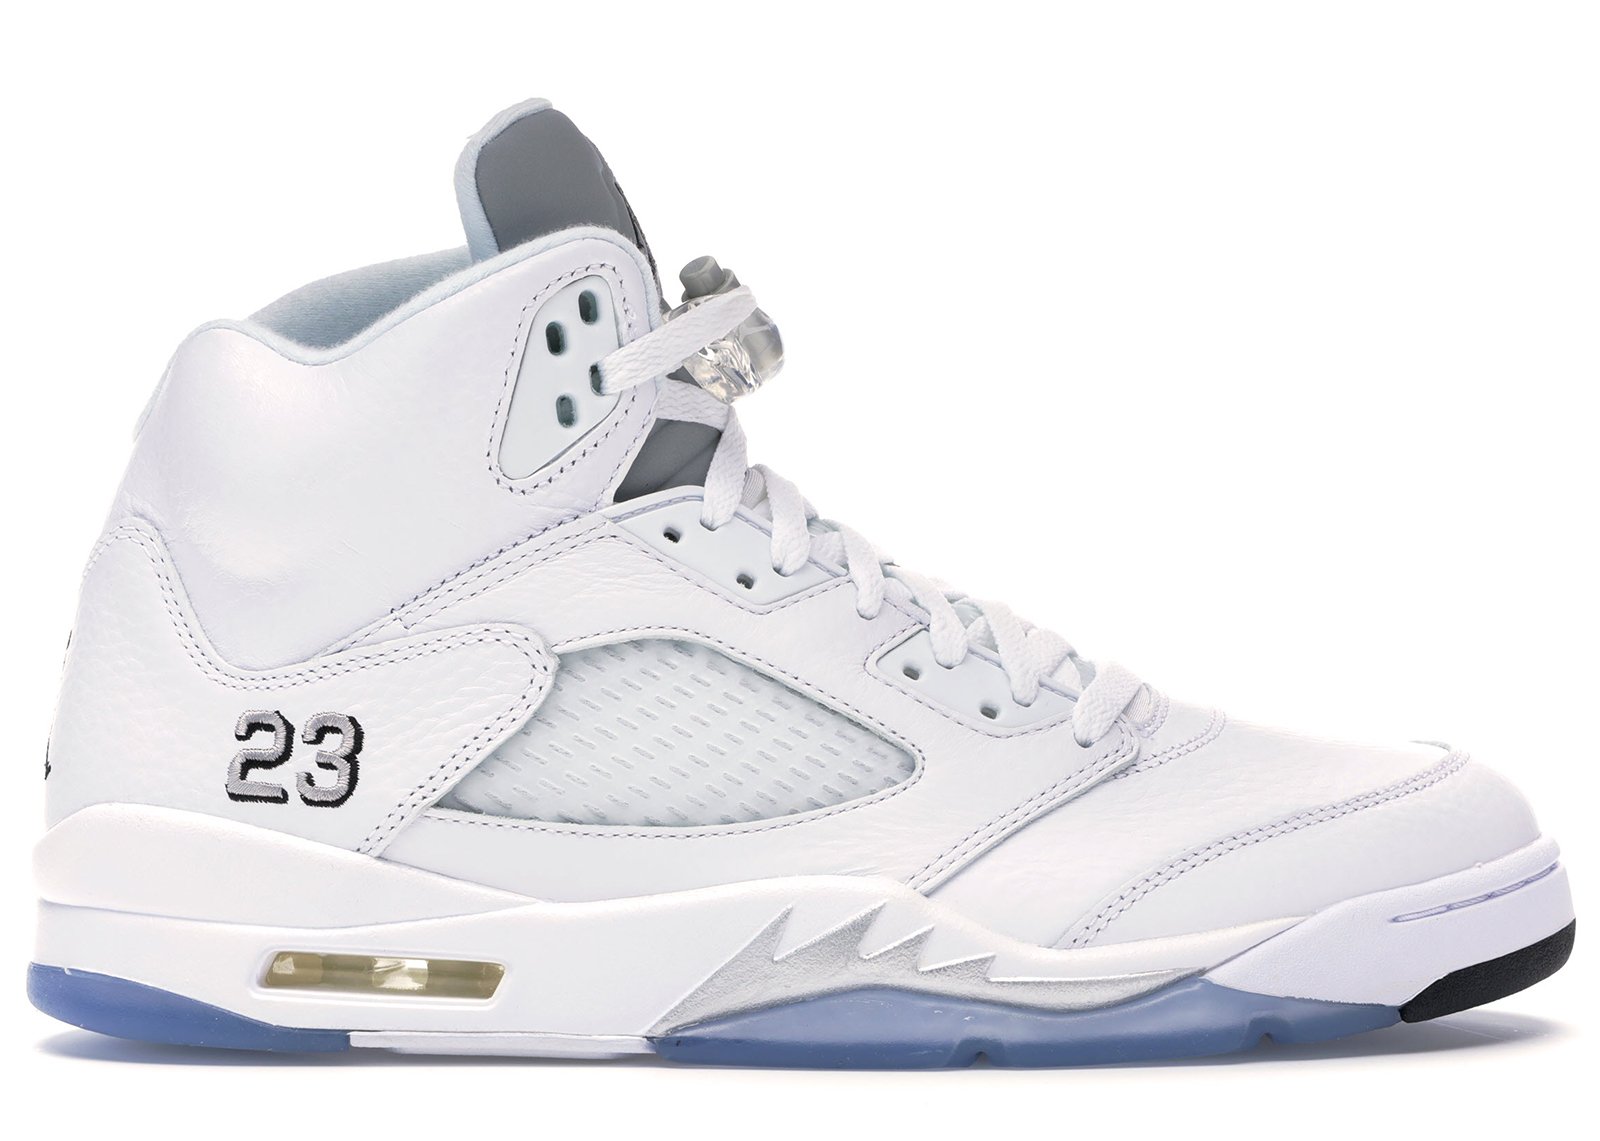 Jordan 5 Retro Metallic White (2015) sneakers